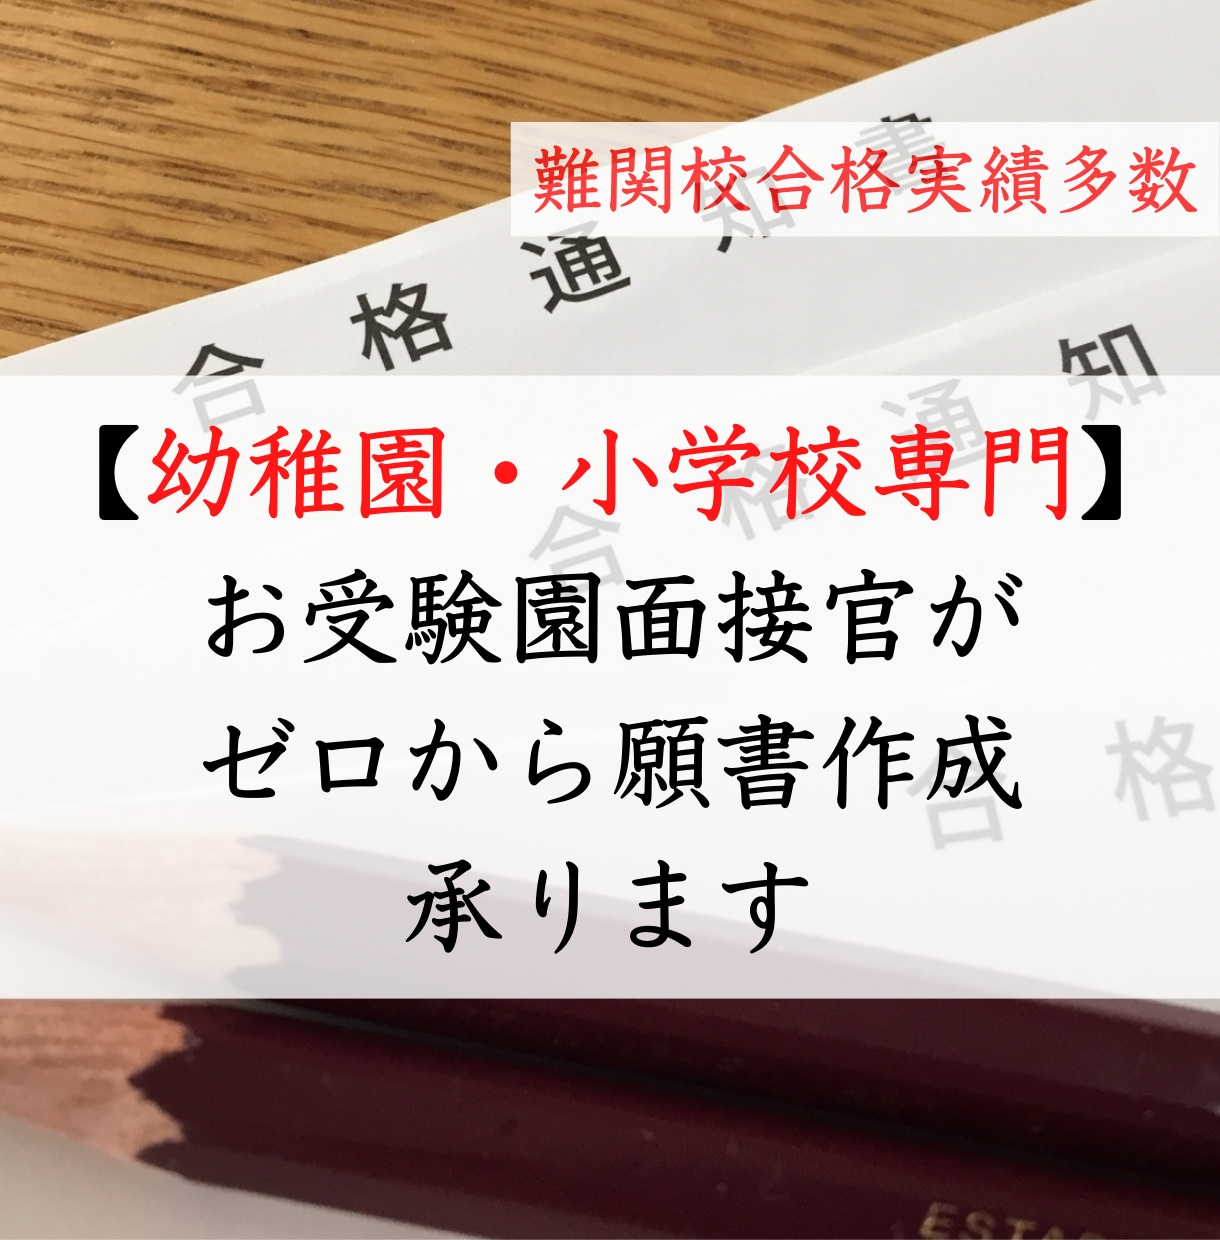 💬Coconara｜We will create custom-made application forms for kindergartens and elementary schools Kaori Tachibana 5.0…